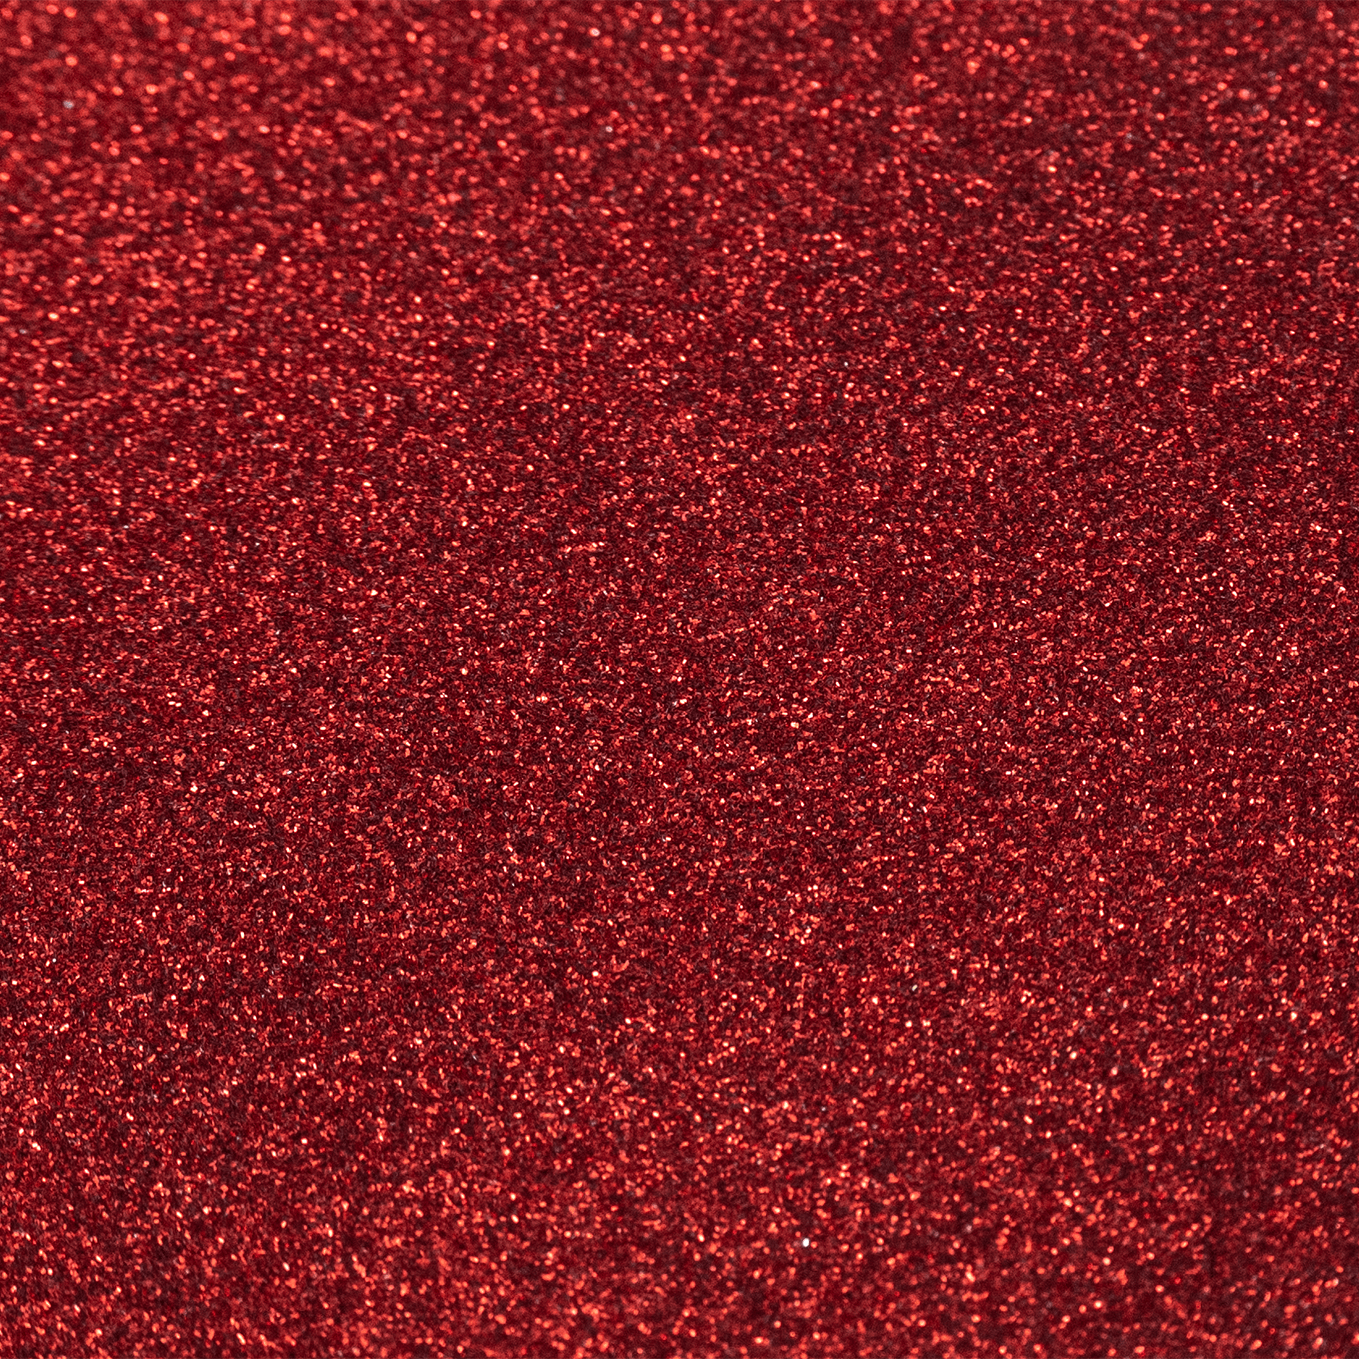 Ruby Red 100g - Resi Glitter Fine